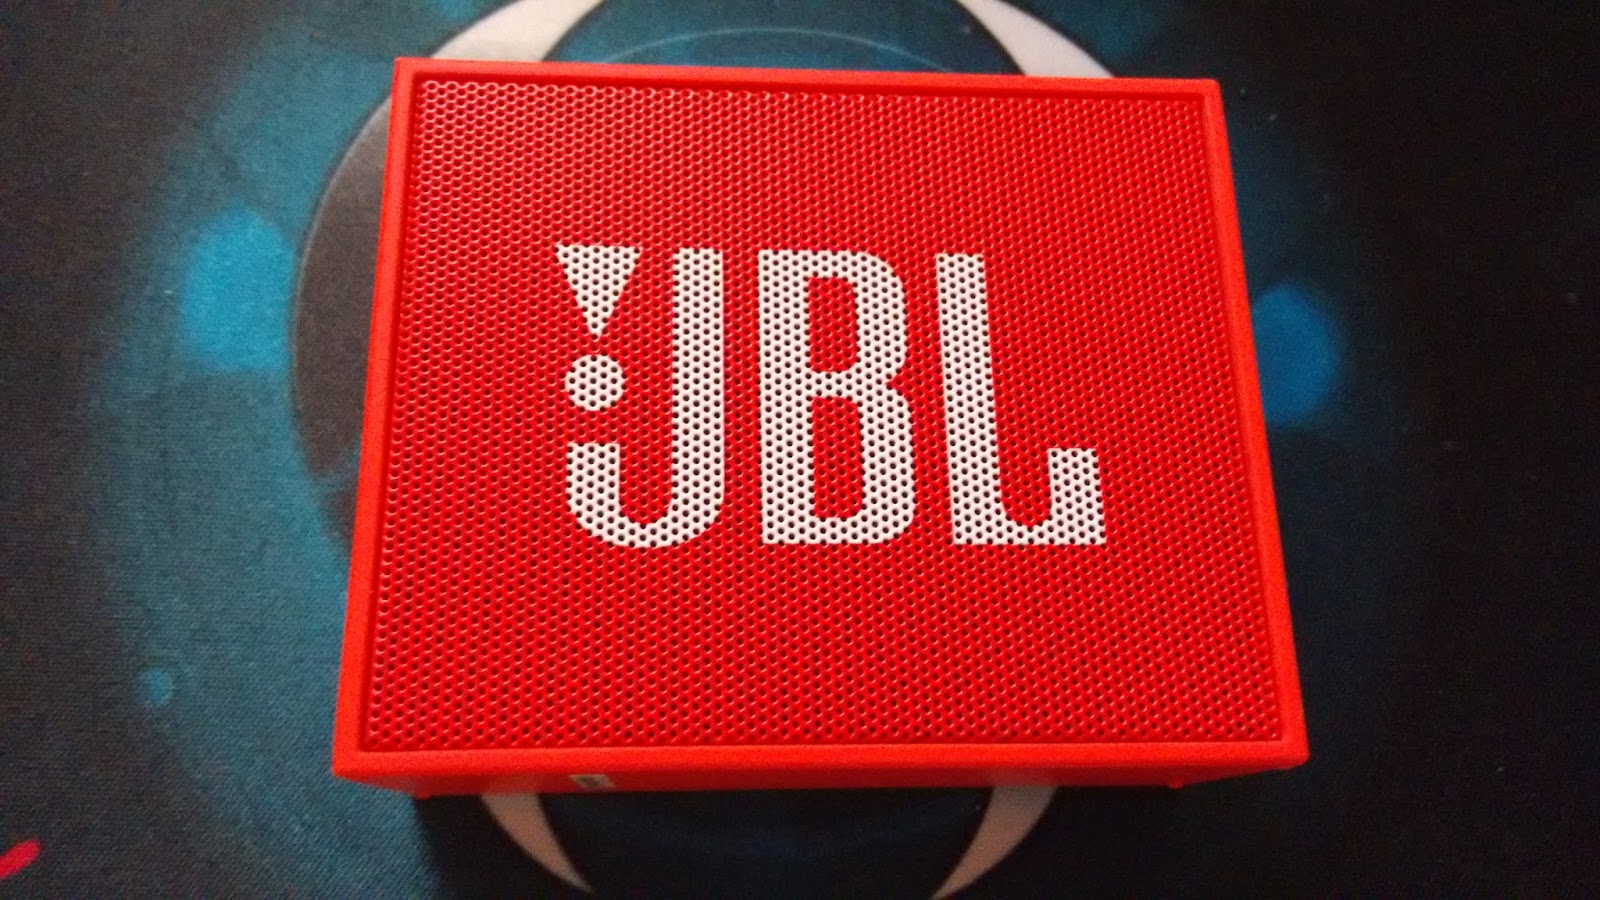 Itsyourtech Jbl Go Portable Bluetooth Speaker Re